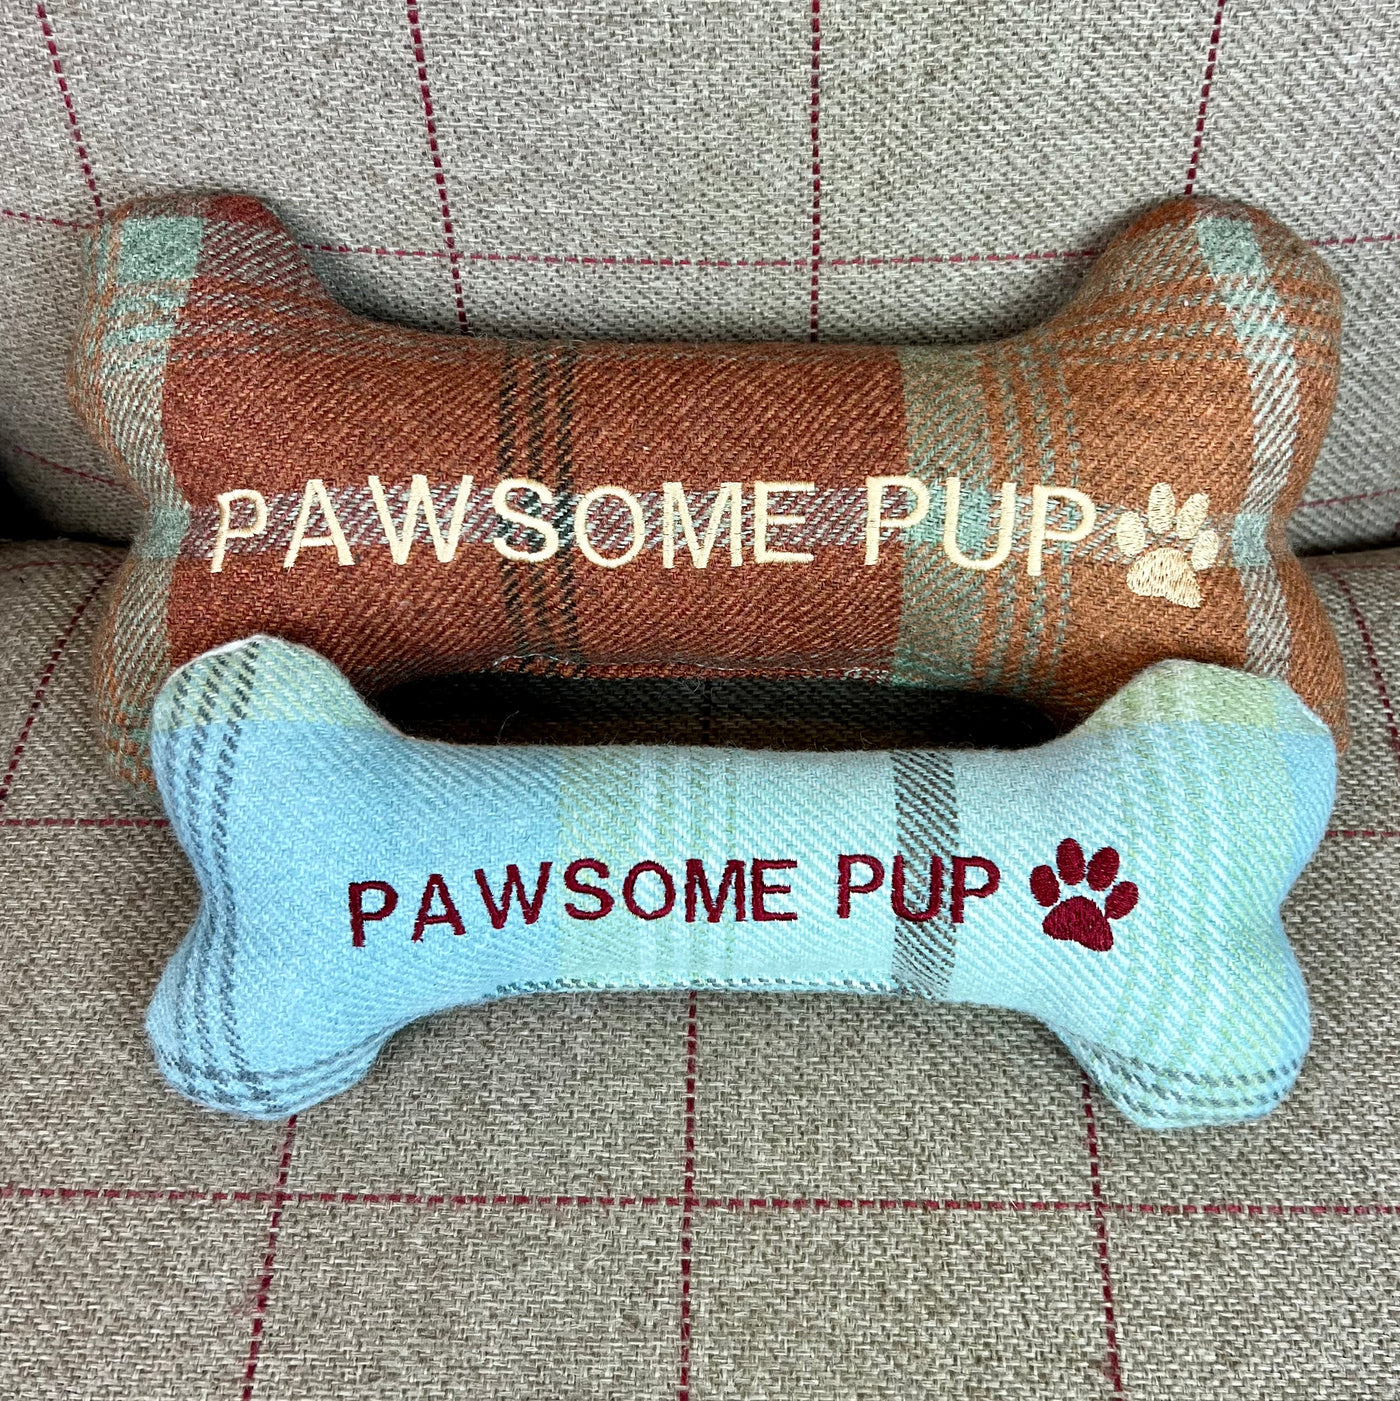 Pawsome Pup Dog Toy